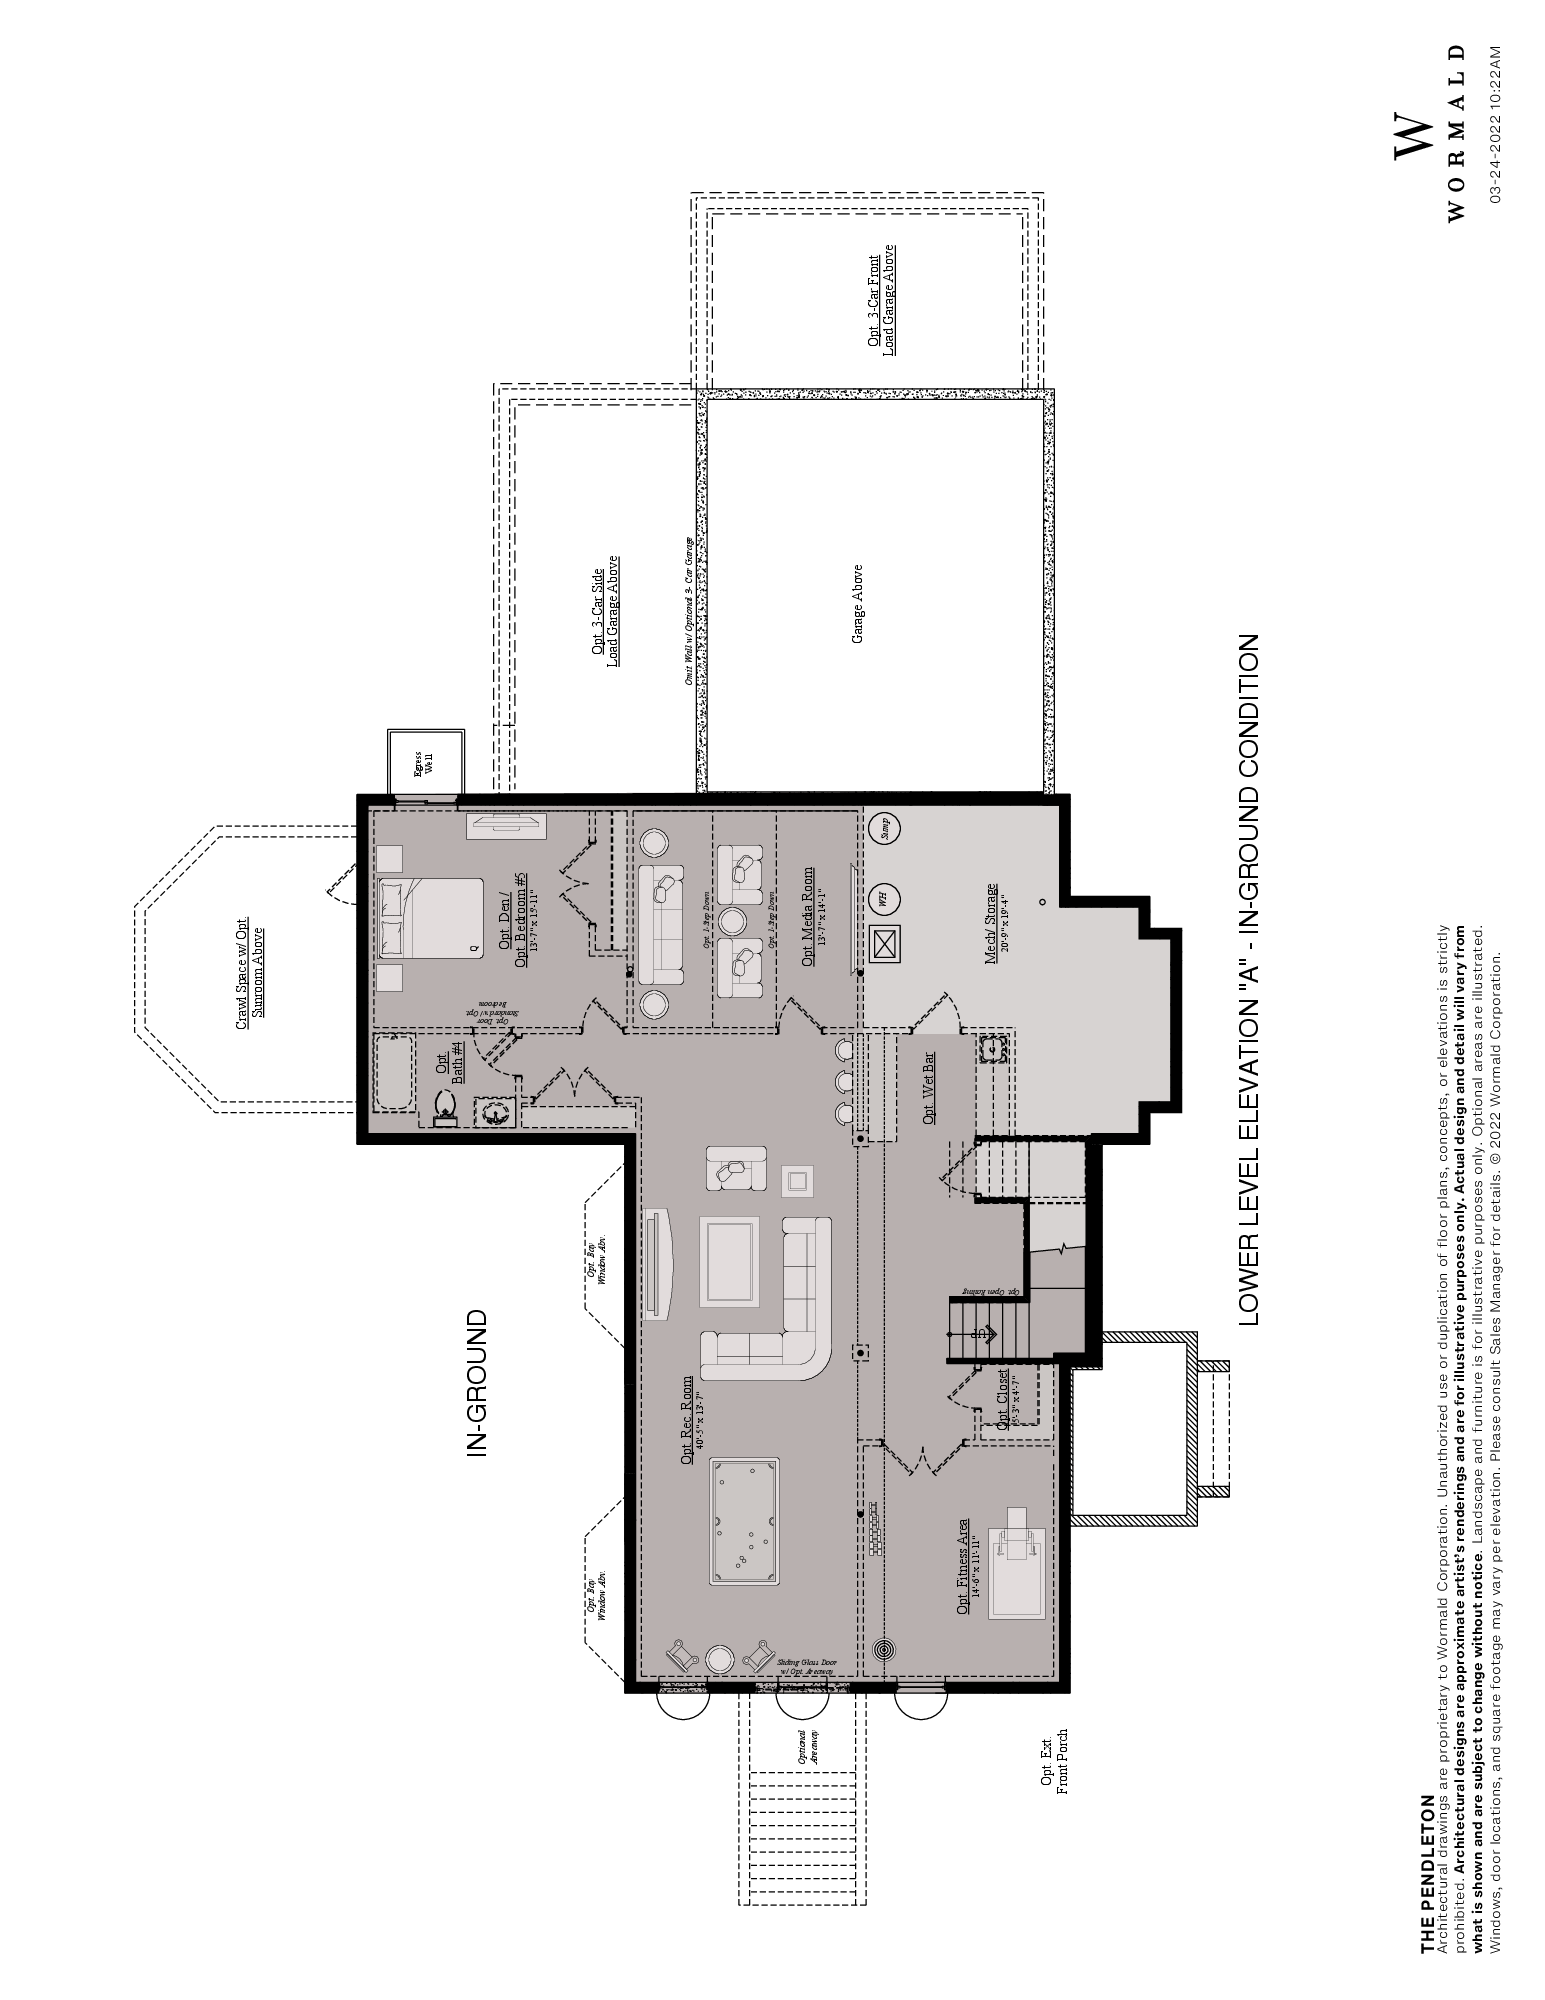 The Pendleton floor plan 5